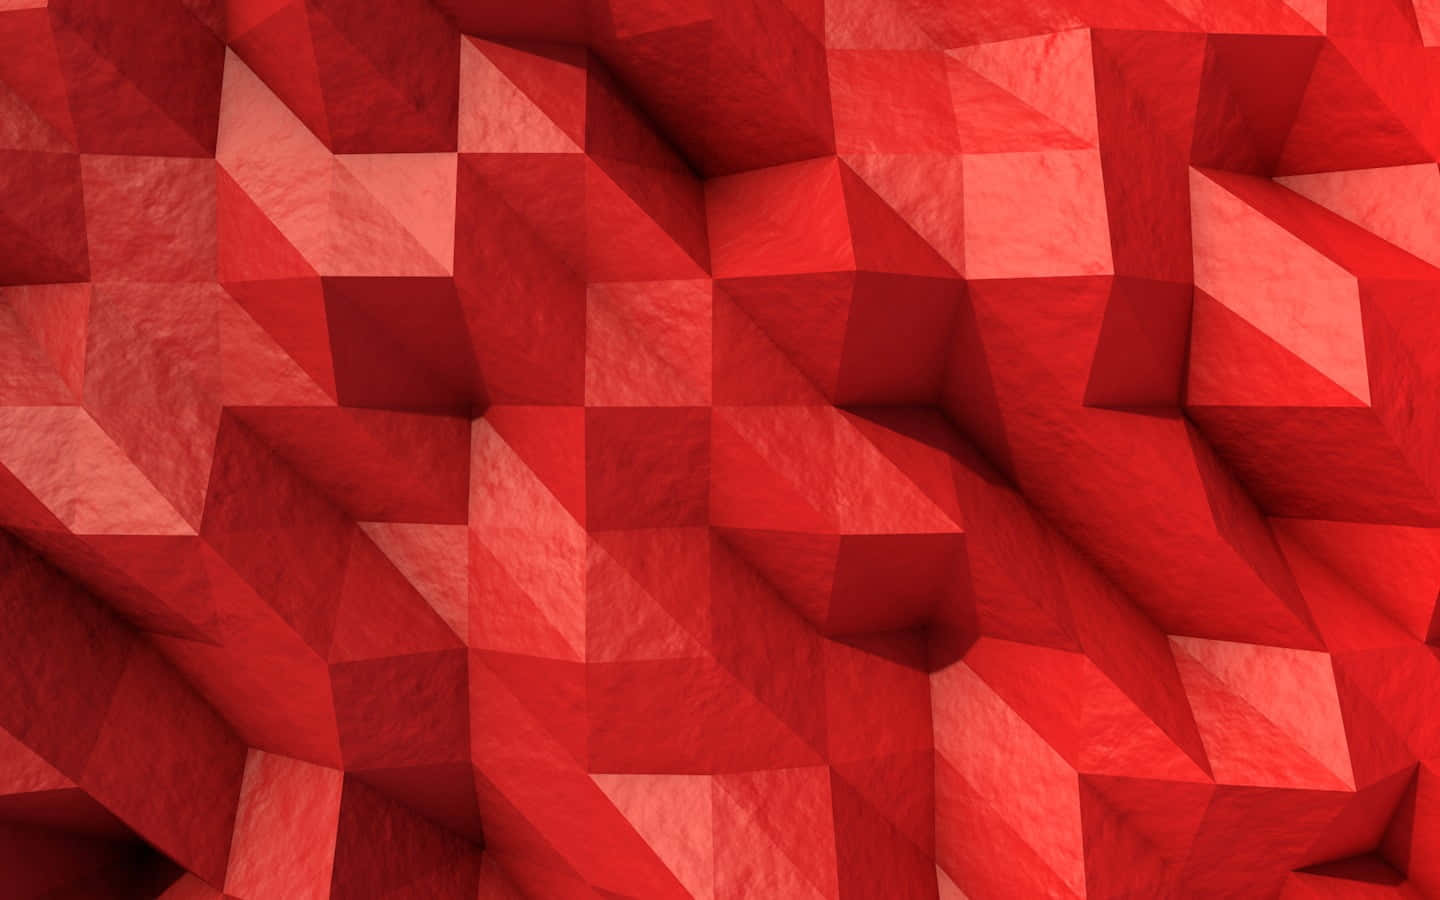 Geometric shapes create a mesmerizing pattern.